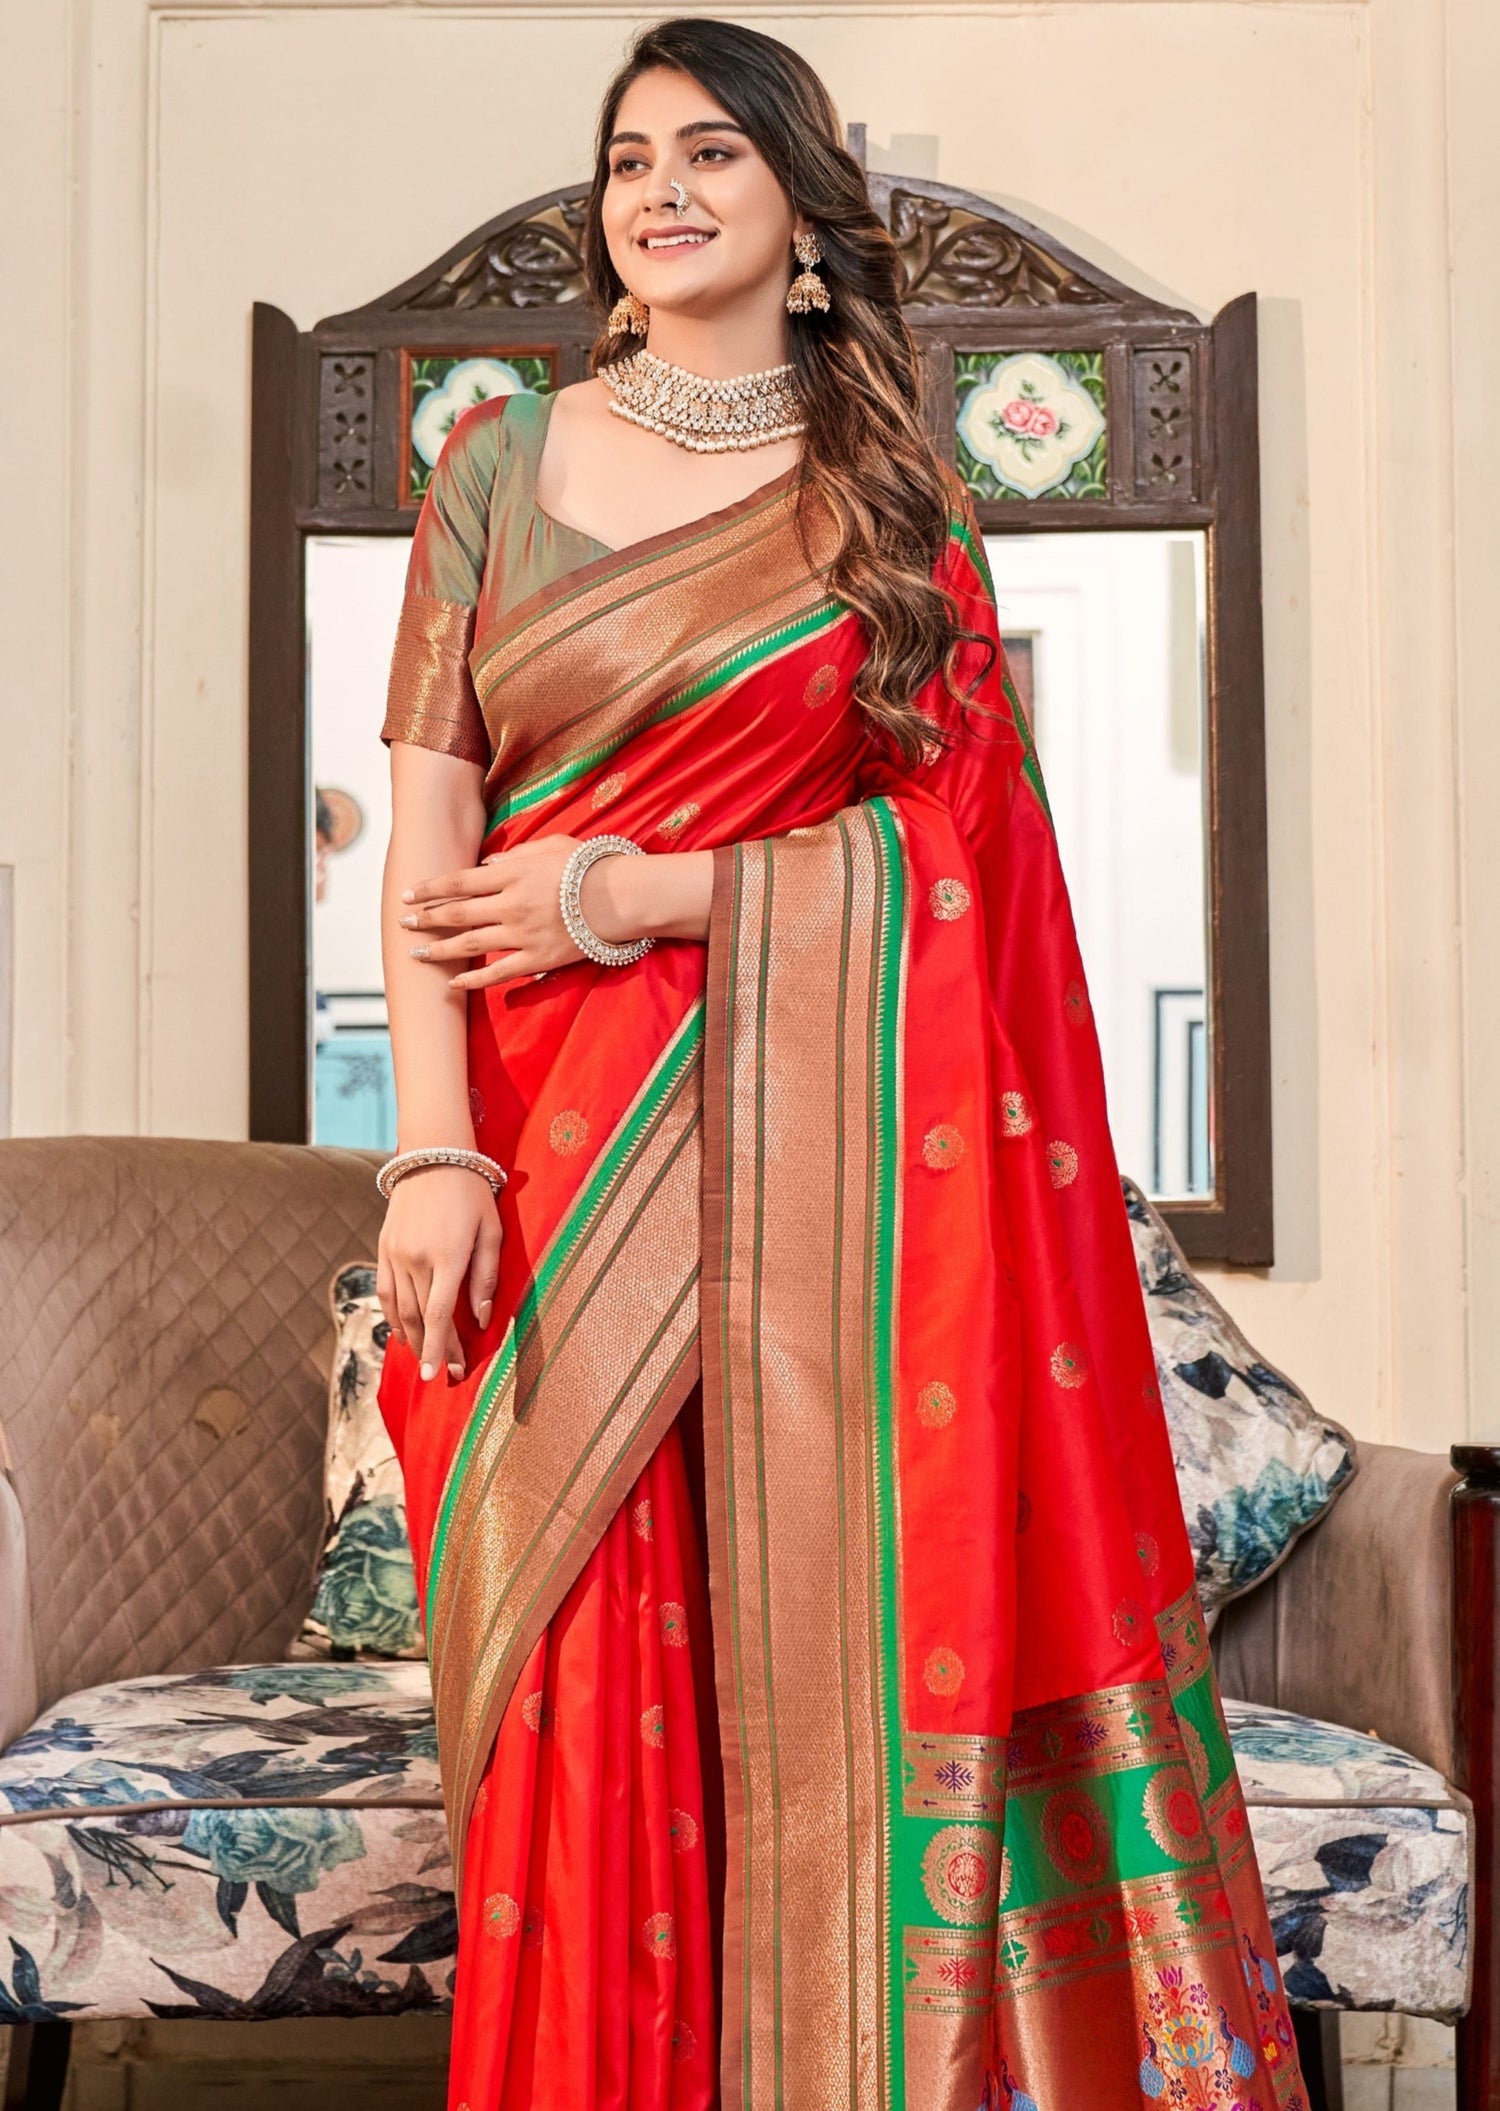 Latest Arrived Red Designer Saree For Wedding | Red Bridal Saree